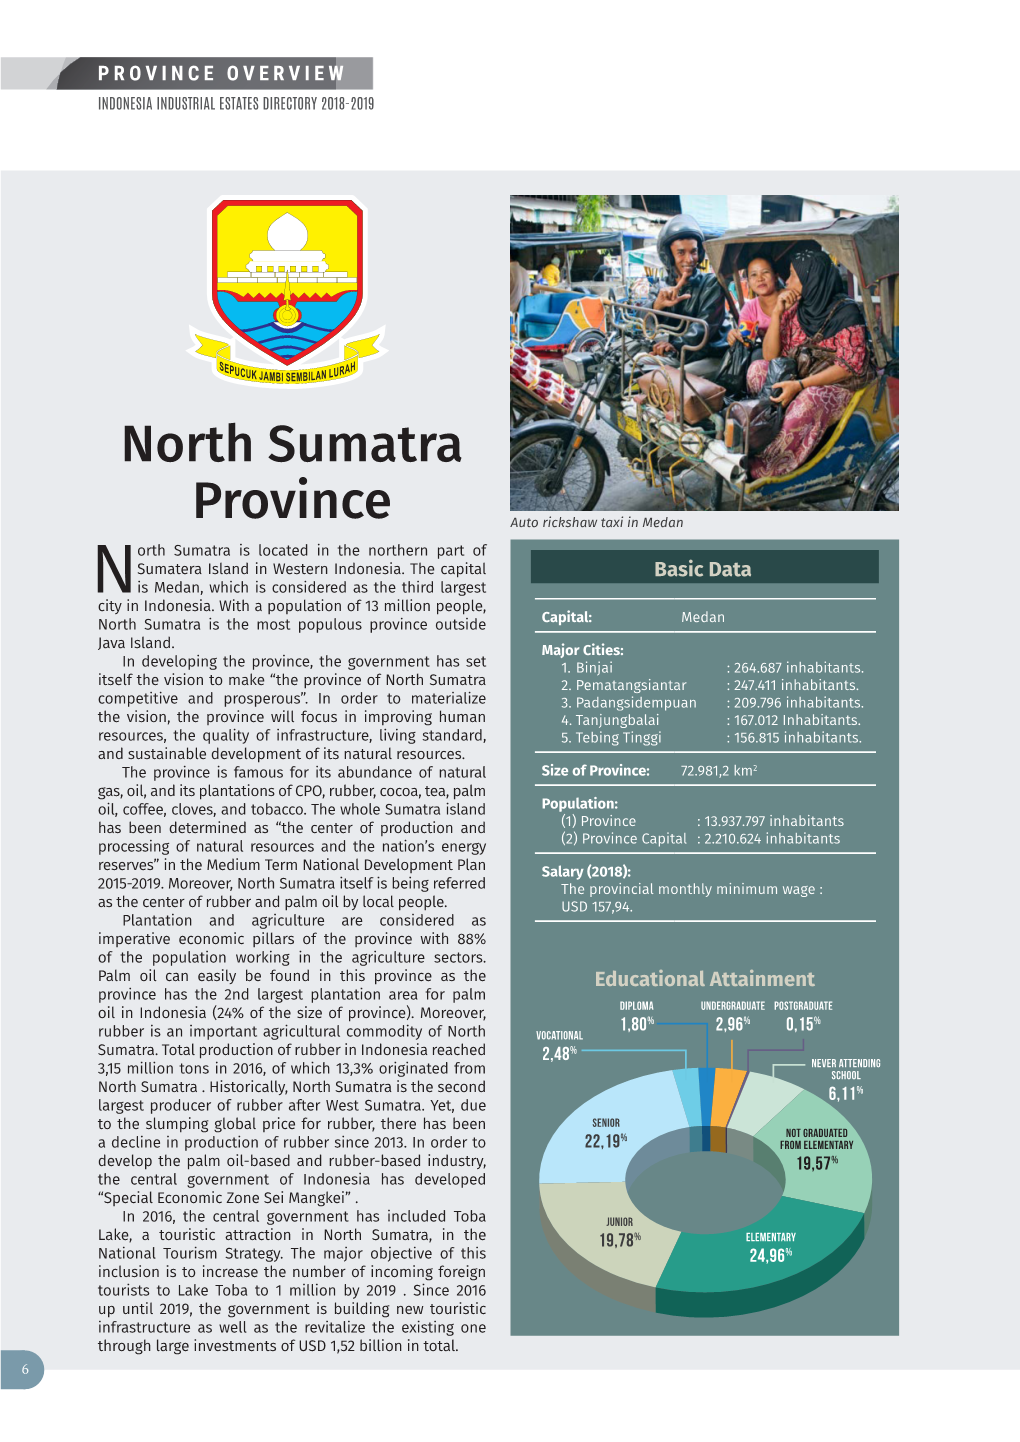 North Sumatra Province